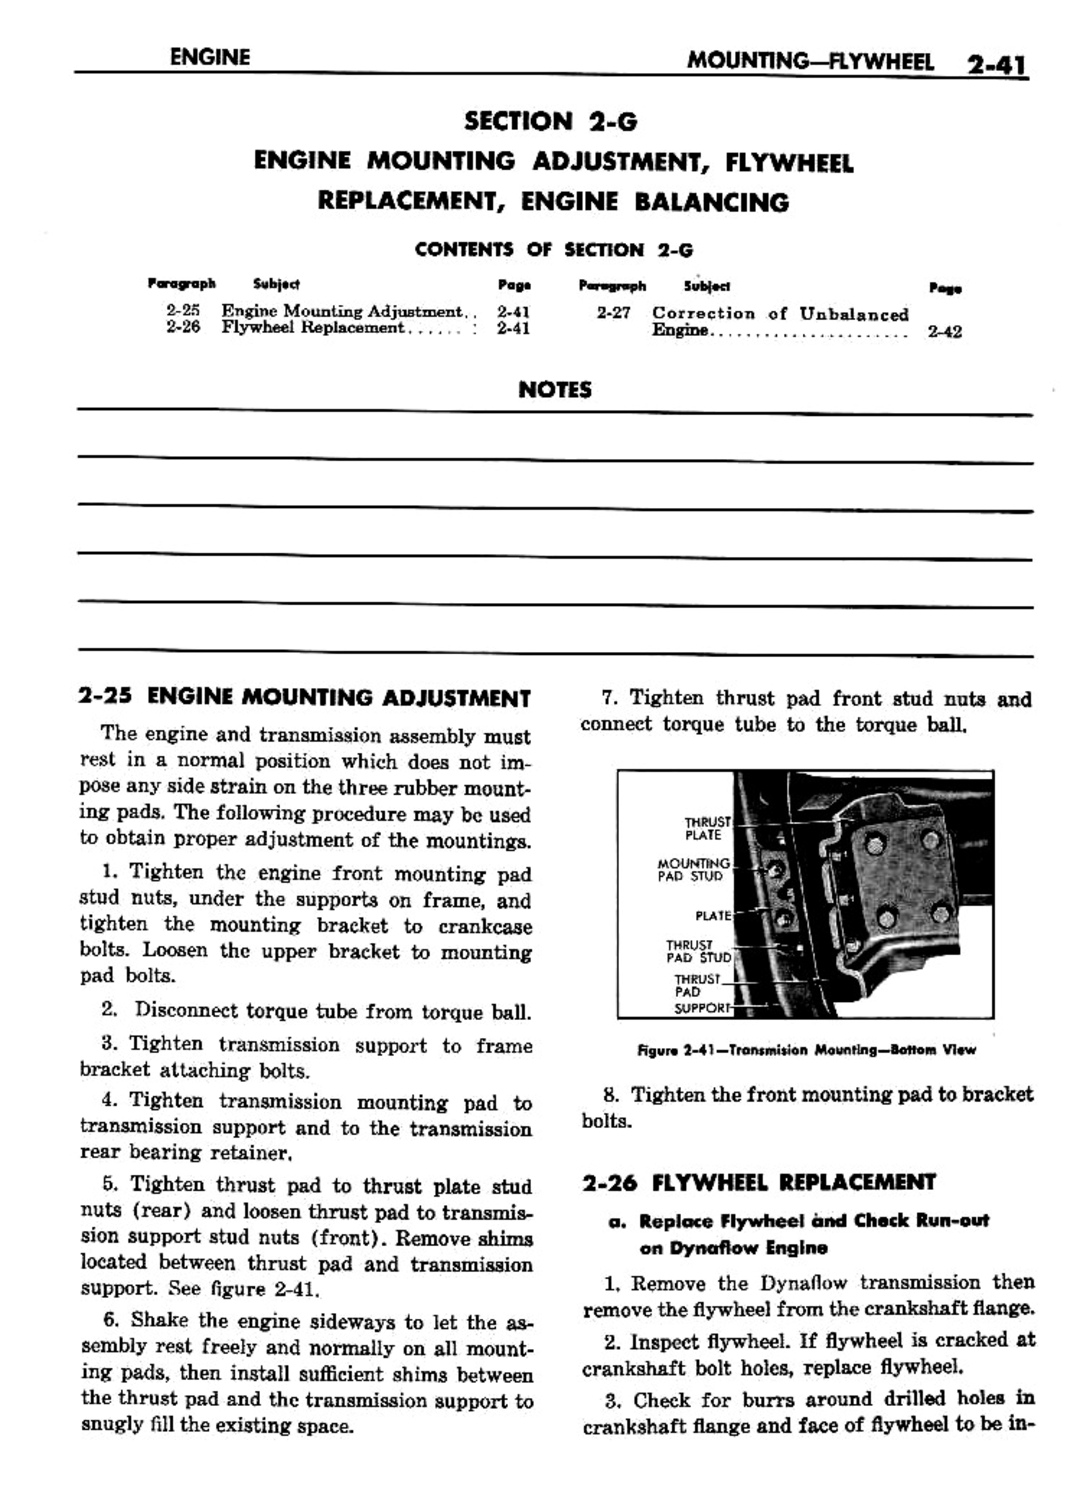 n_03 1957 Buick Shop Manual - Engine-041-041.jpg